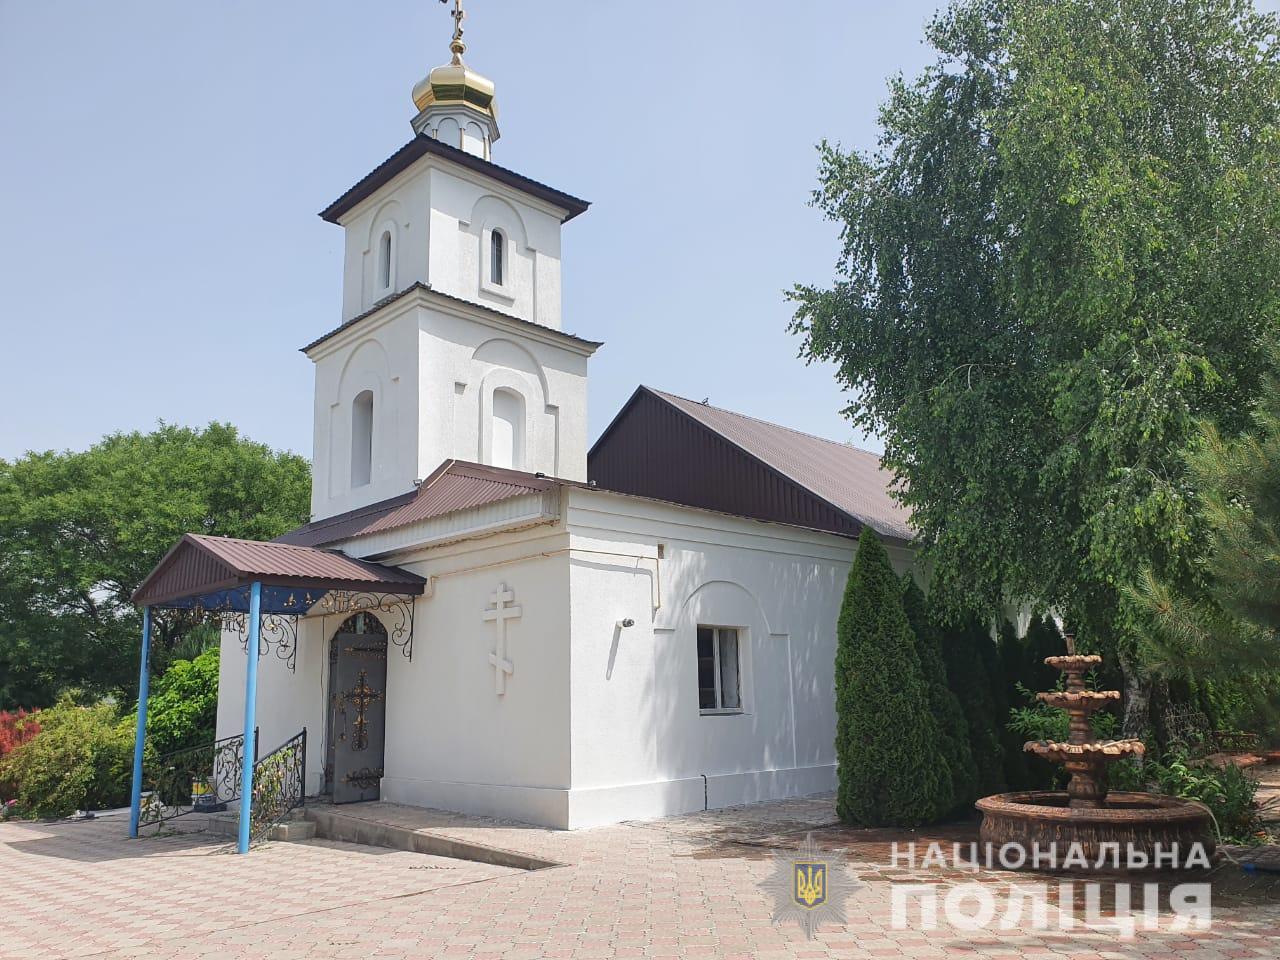 Крест, магнитолу, стабилизатор напряжения: в Запорожской области обокрали храм (ФОТО)